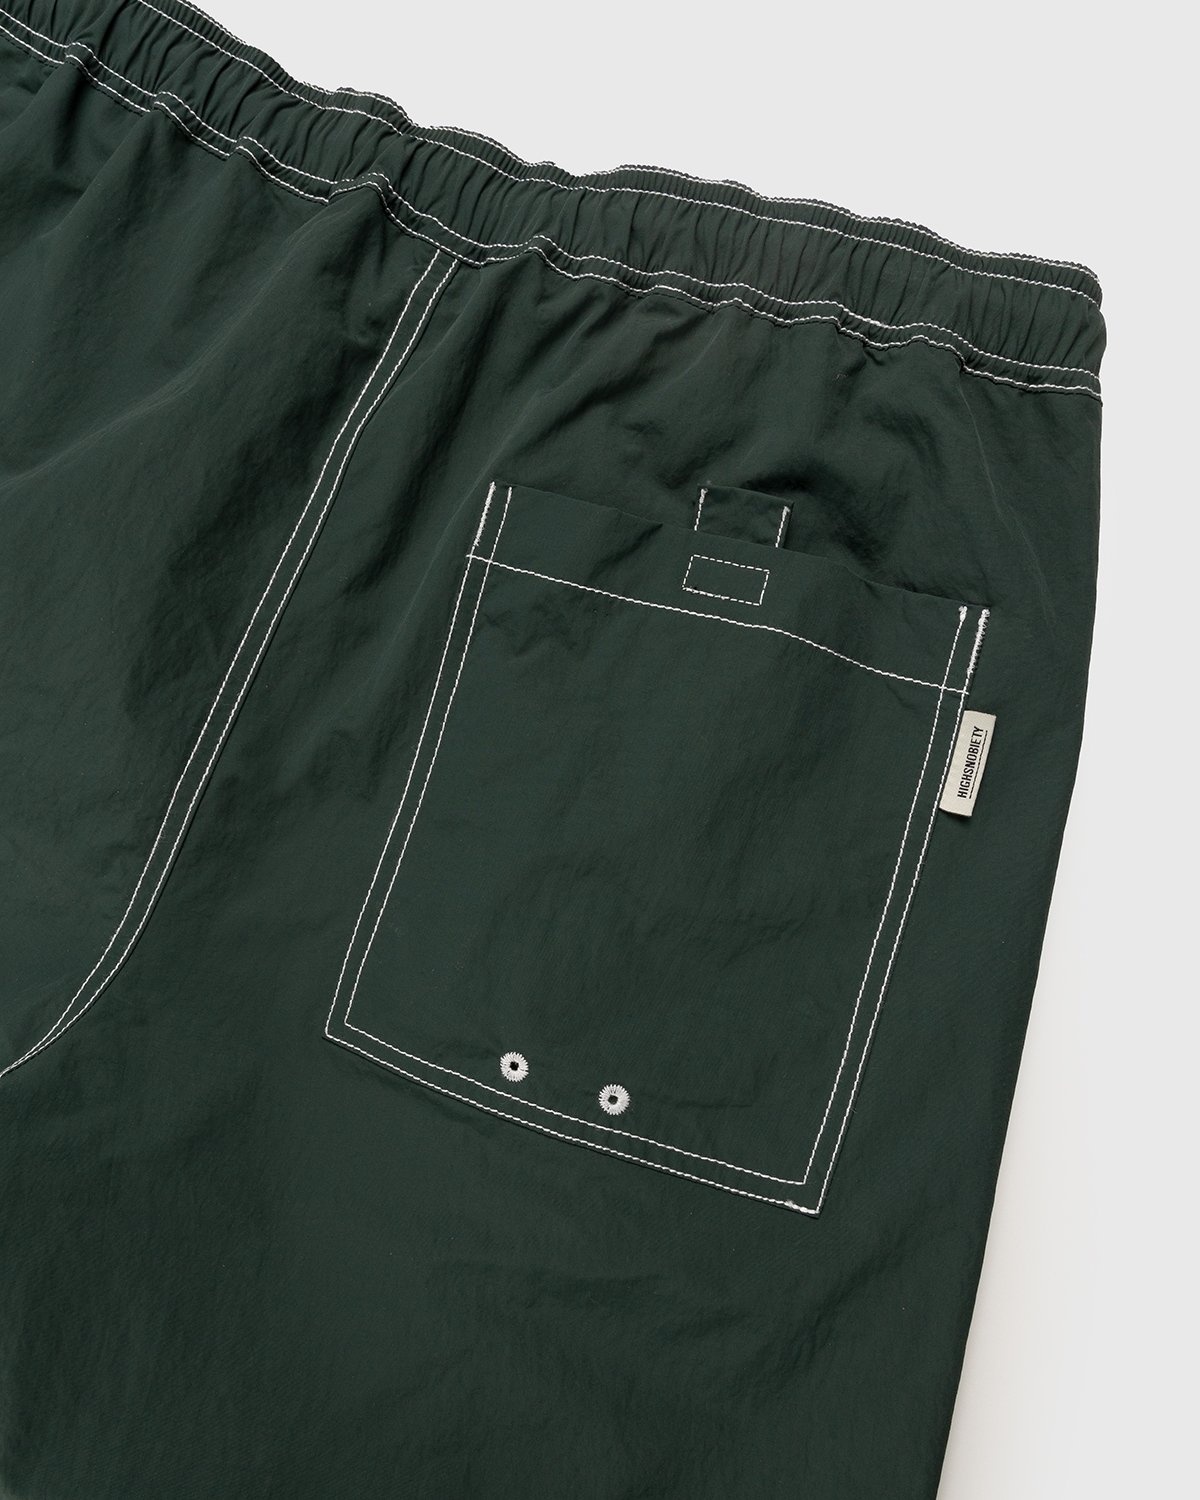 Highsnobiety – Contrast Brushed Nylon Elastic Pants Green - Pants - Green - Image 3